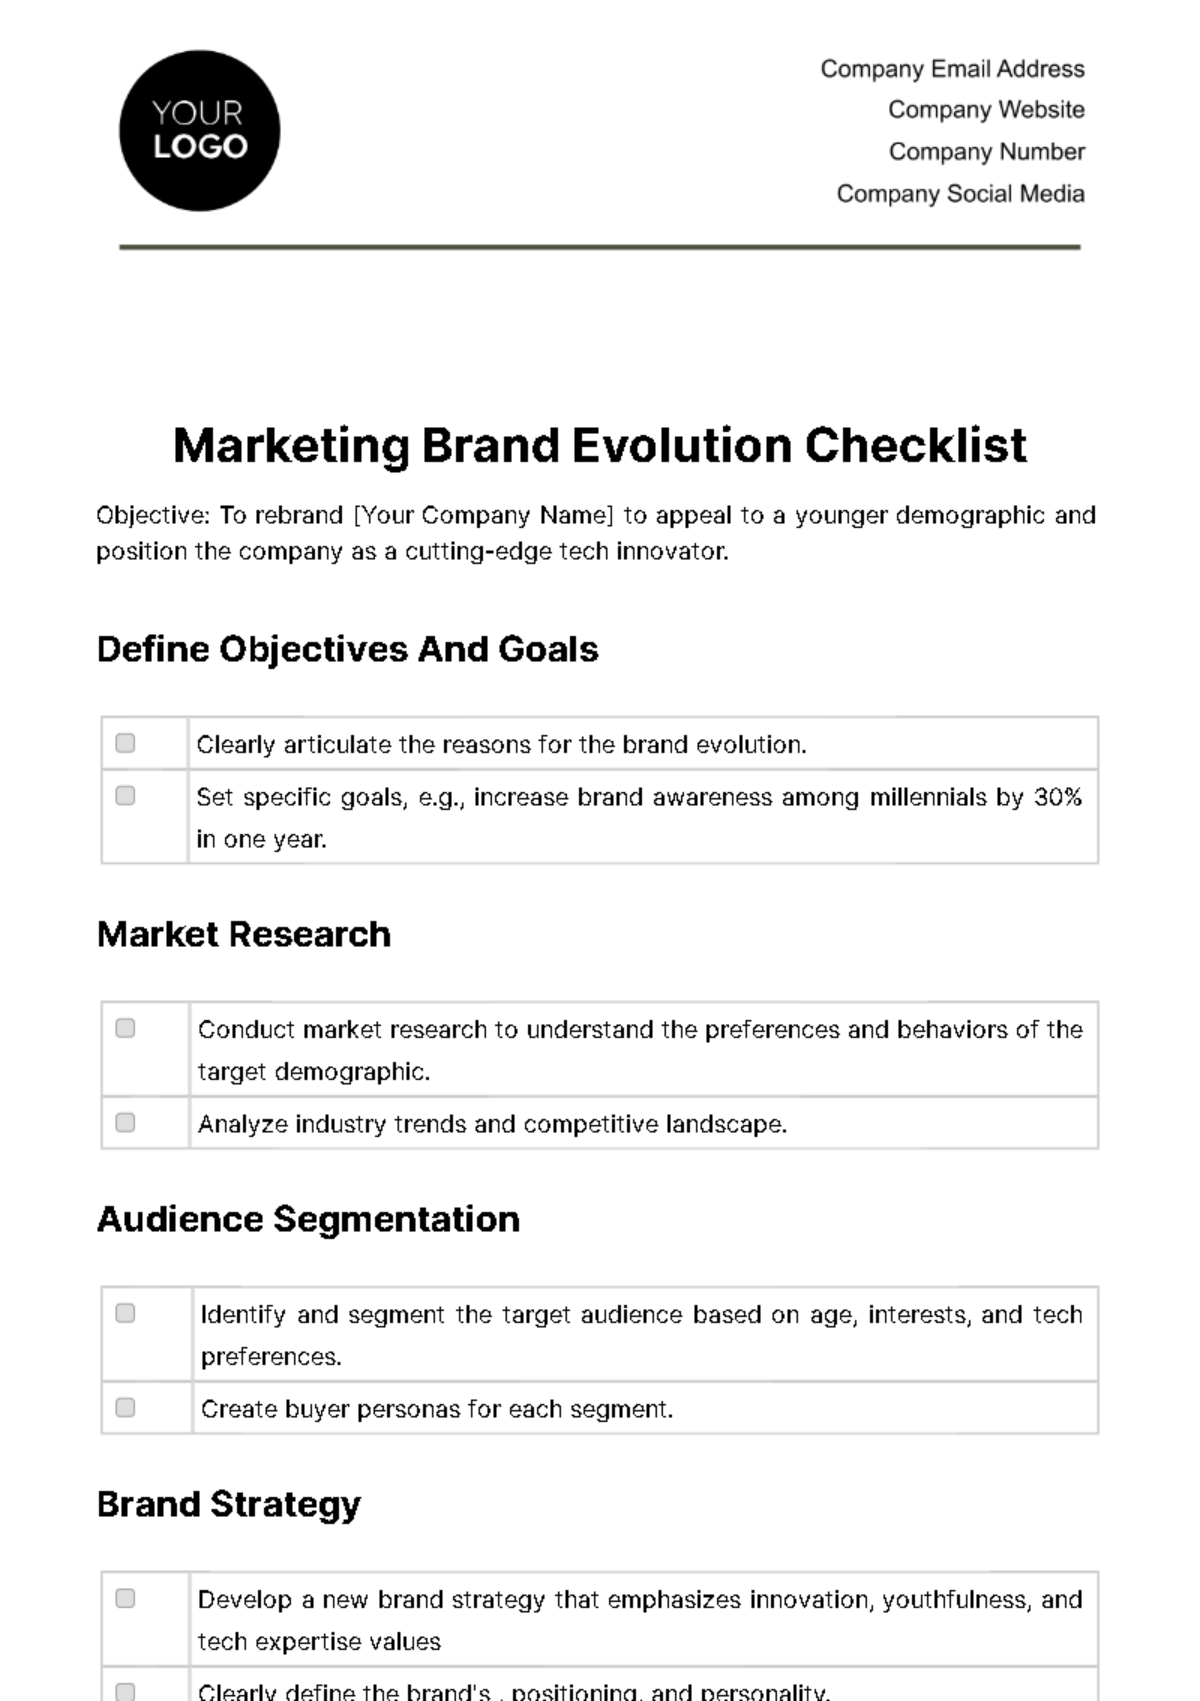 Free Marketing Brand Evolution Checklist Template